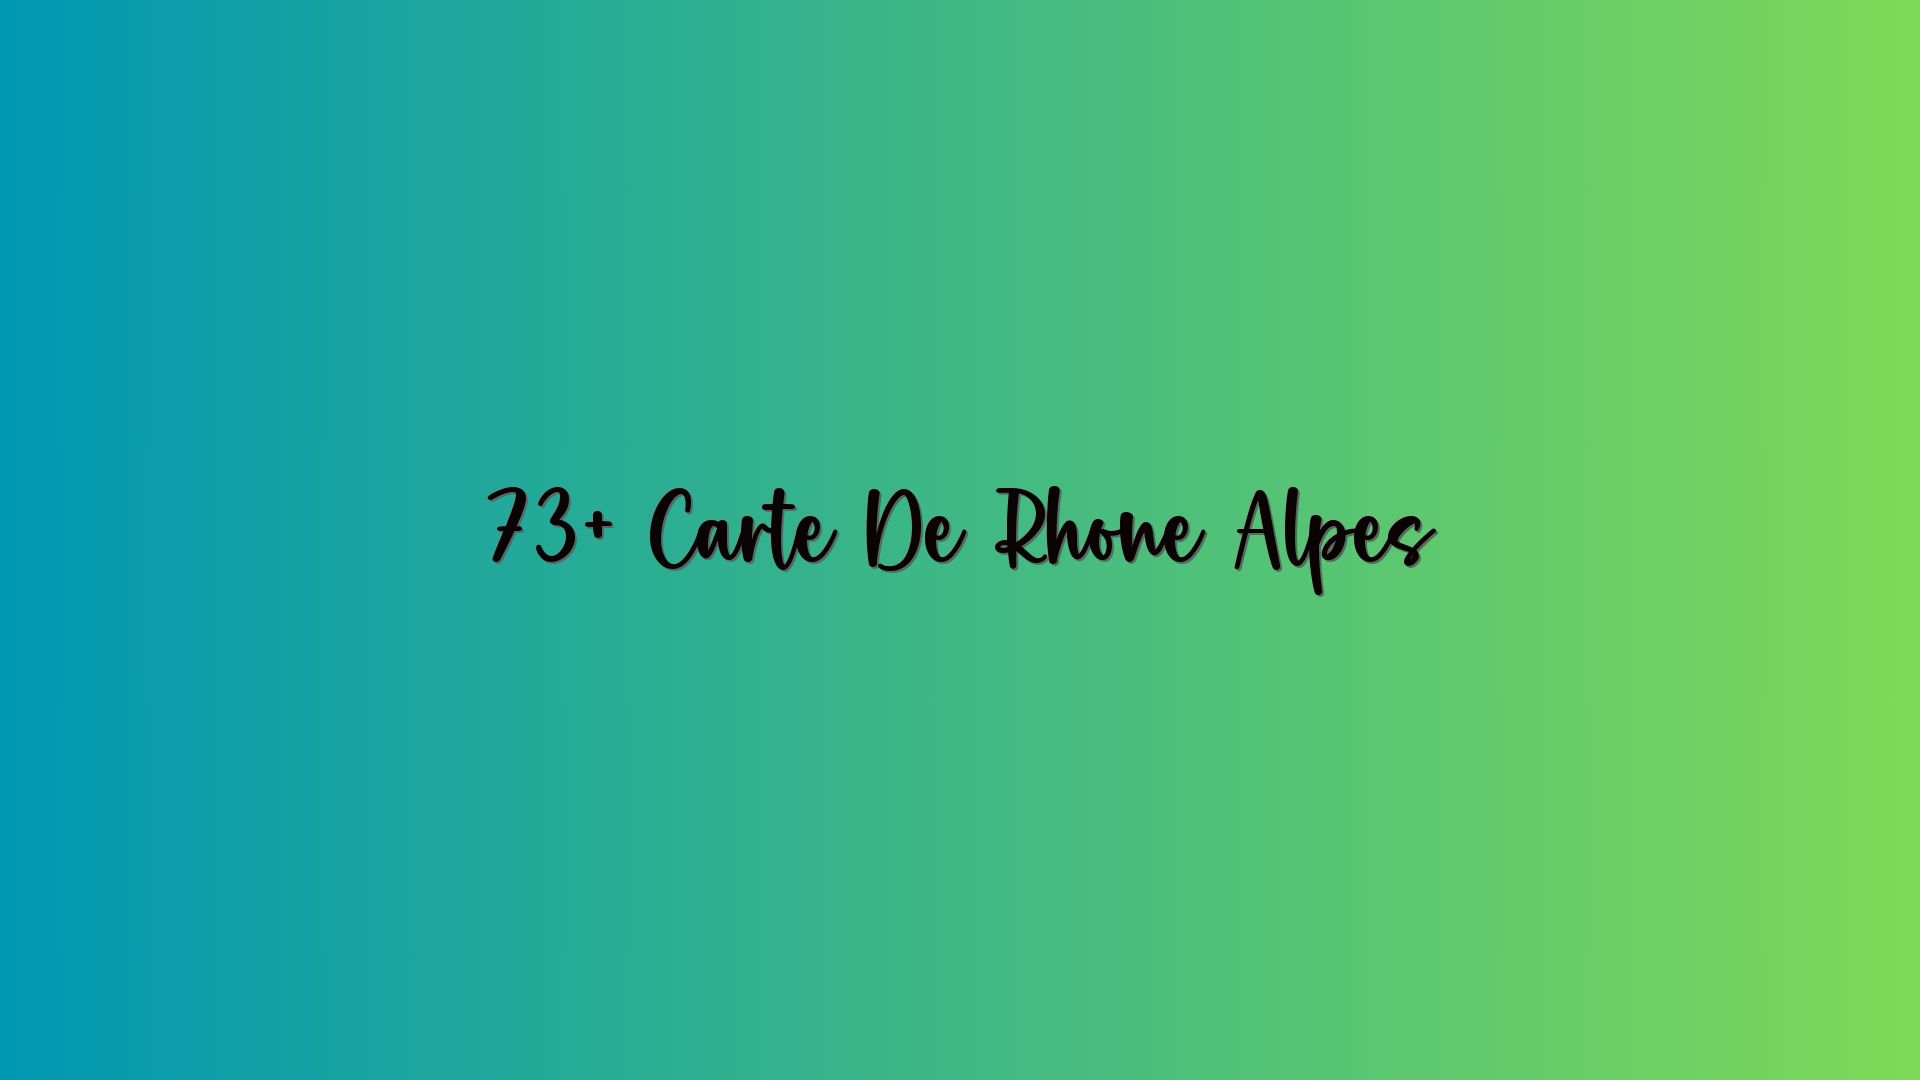 73+ Carte De Rhone Alpes